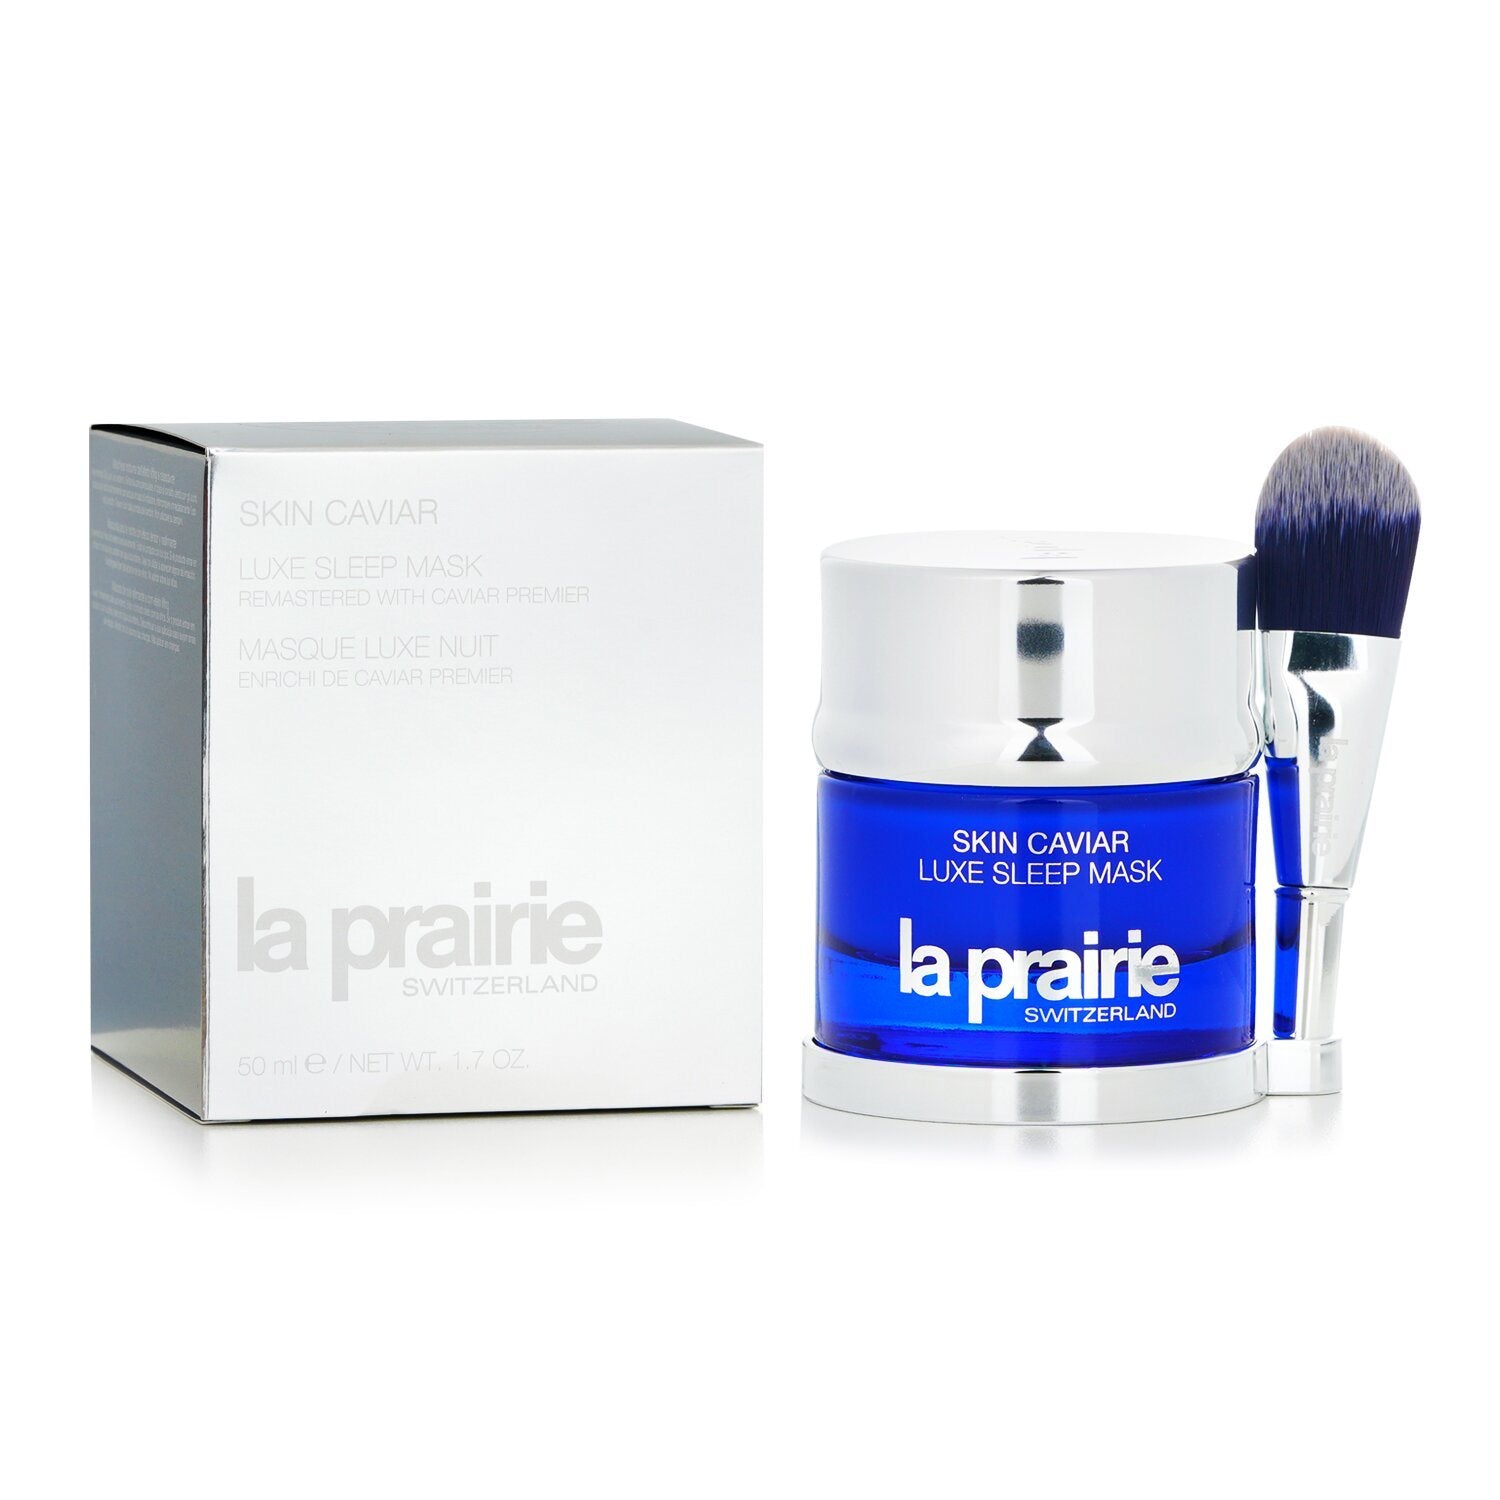 LA PRAIRIE - Skin Caviar Luxe Sleep Mask - 50ml/1.7oz 3P's Inclusive Beauty